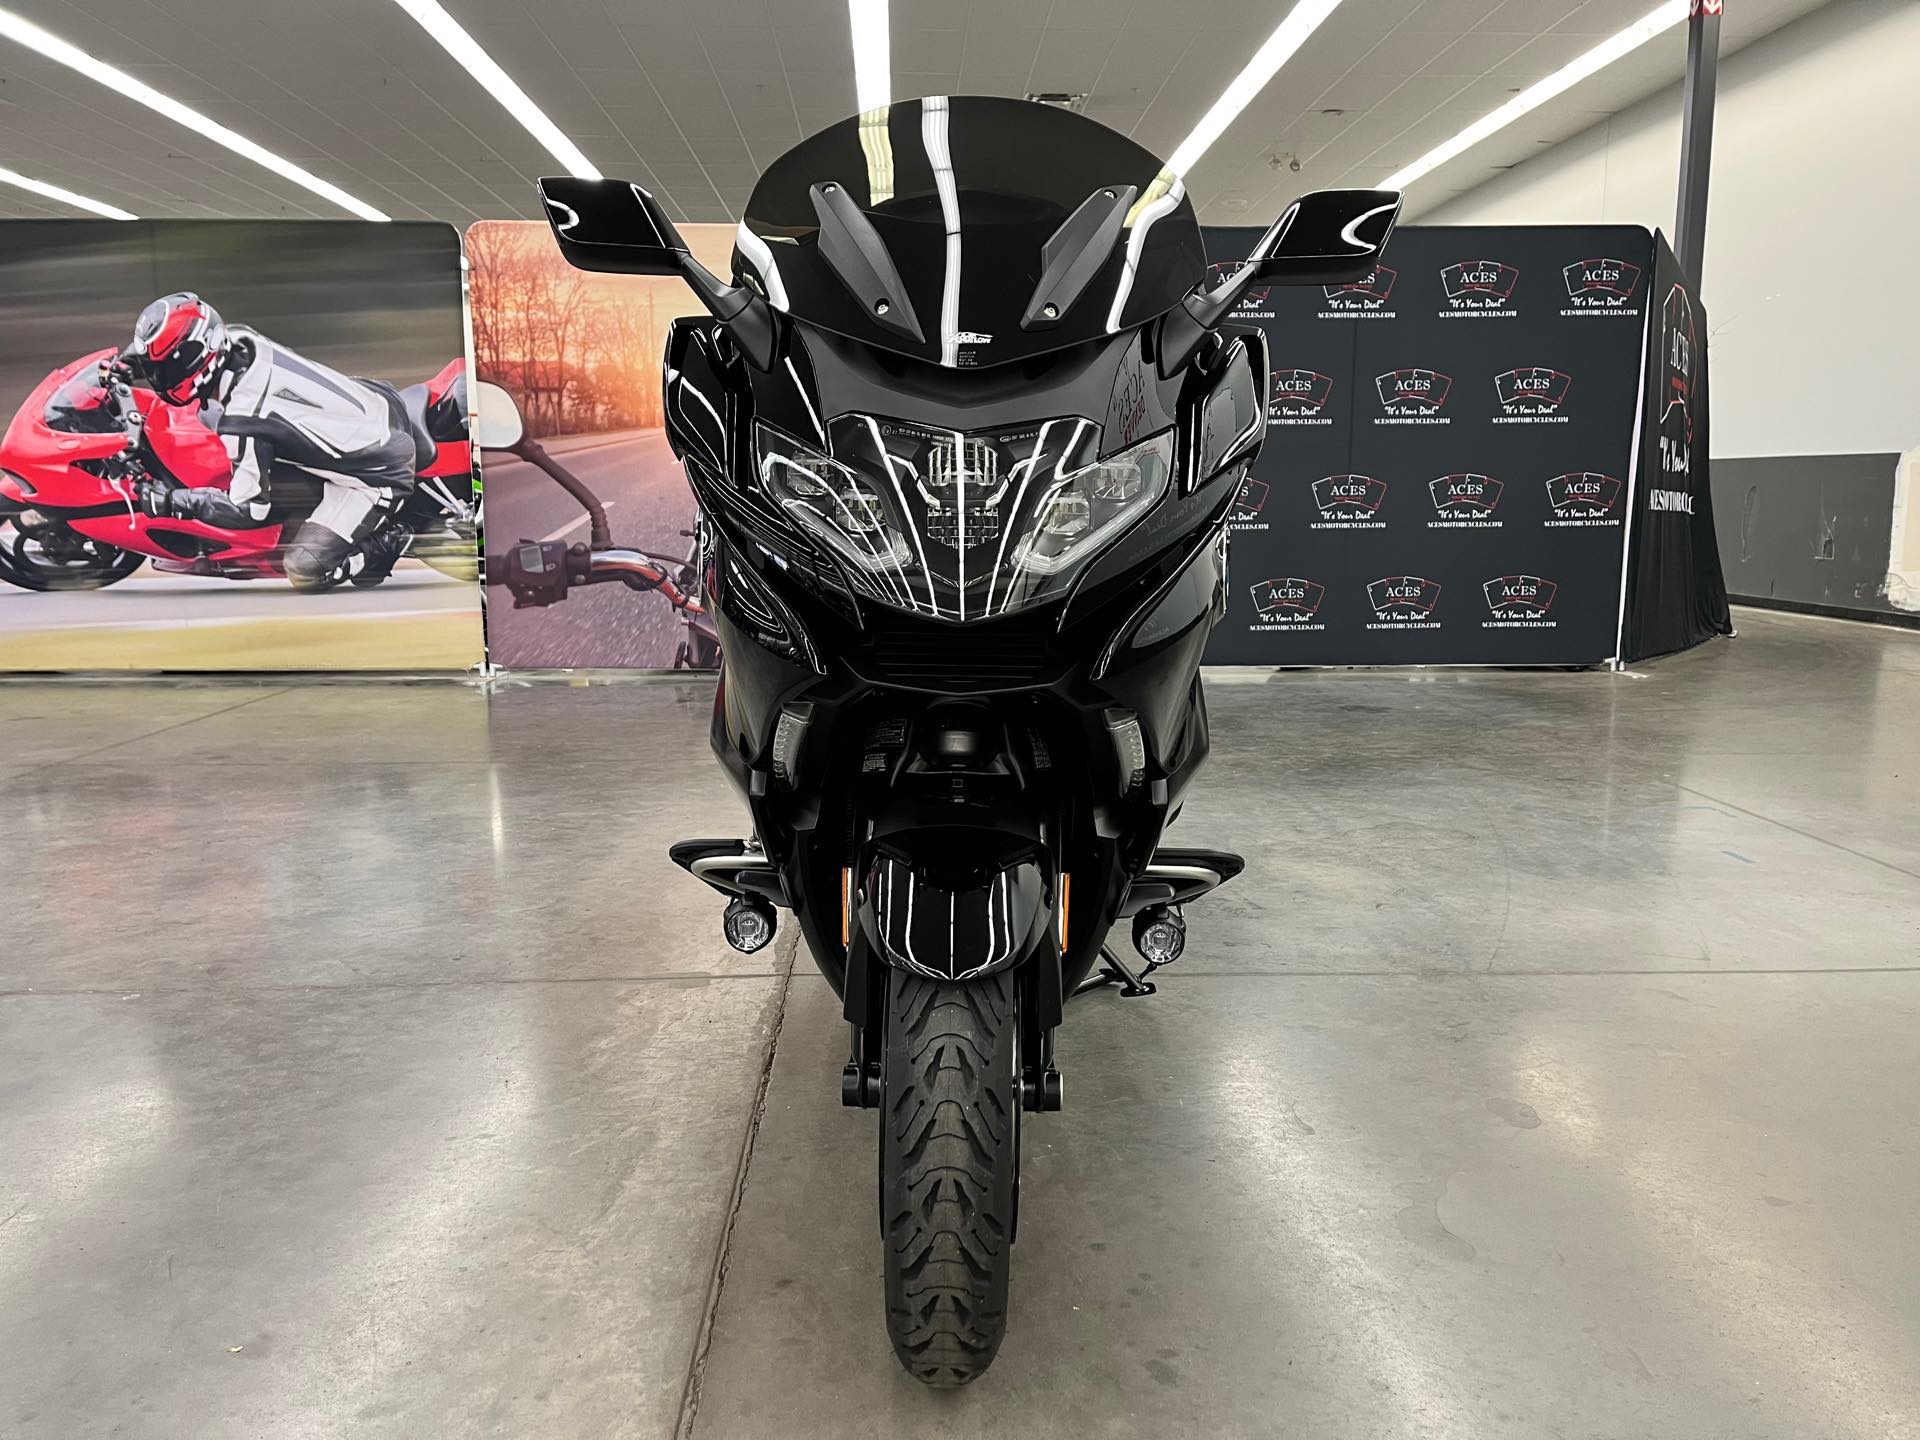 2022 BMW K 1600 B at Aces Motorcycles - Denver